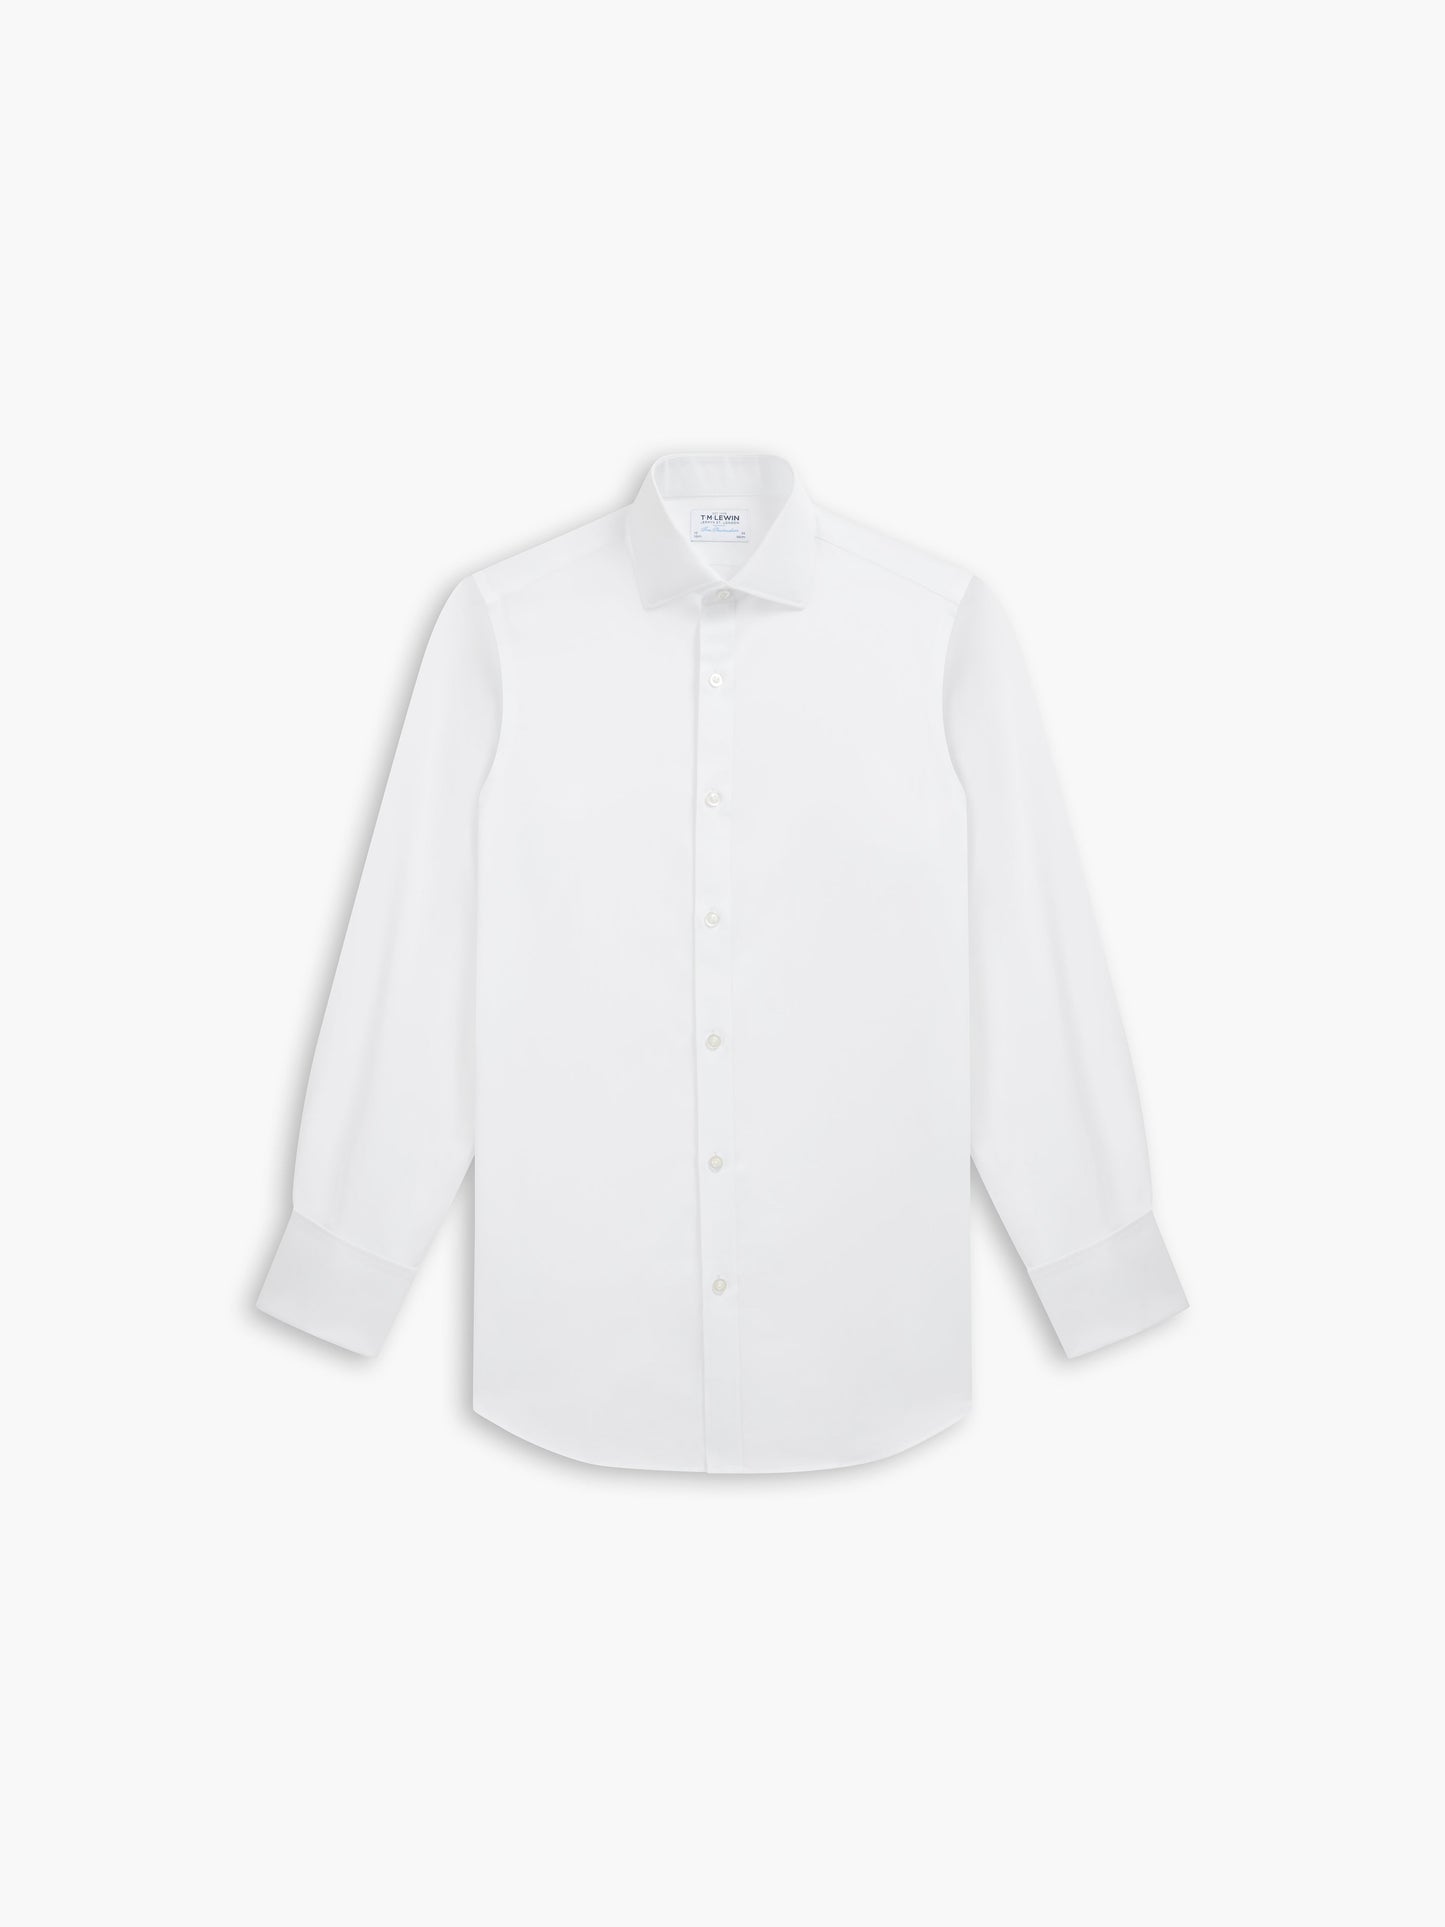 Non-Iron White Poplin Fitted Dual Cuff Classic Collar Shirt